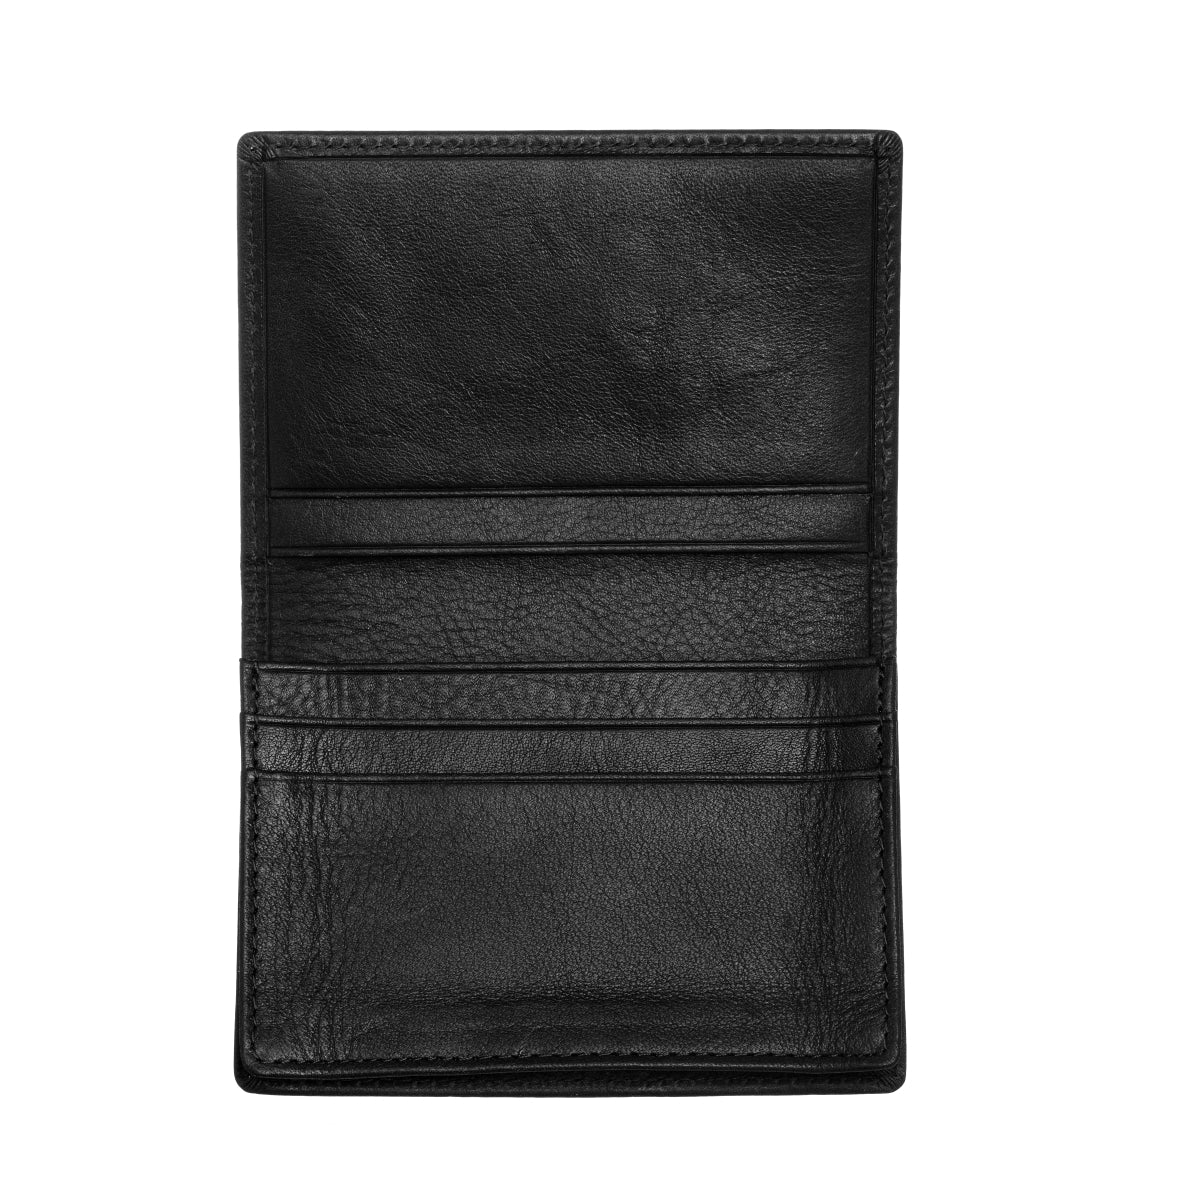 Breed Porter Genuine Leather Bi-Fold Wallet - Black - BRDWALL002-BLK